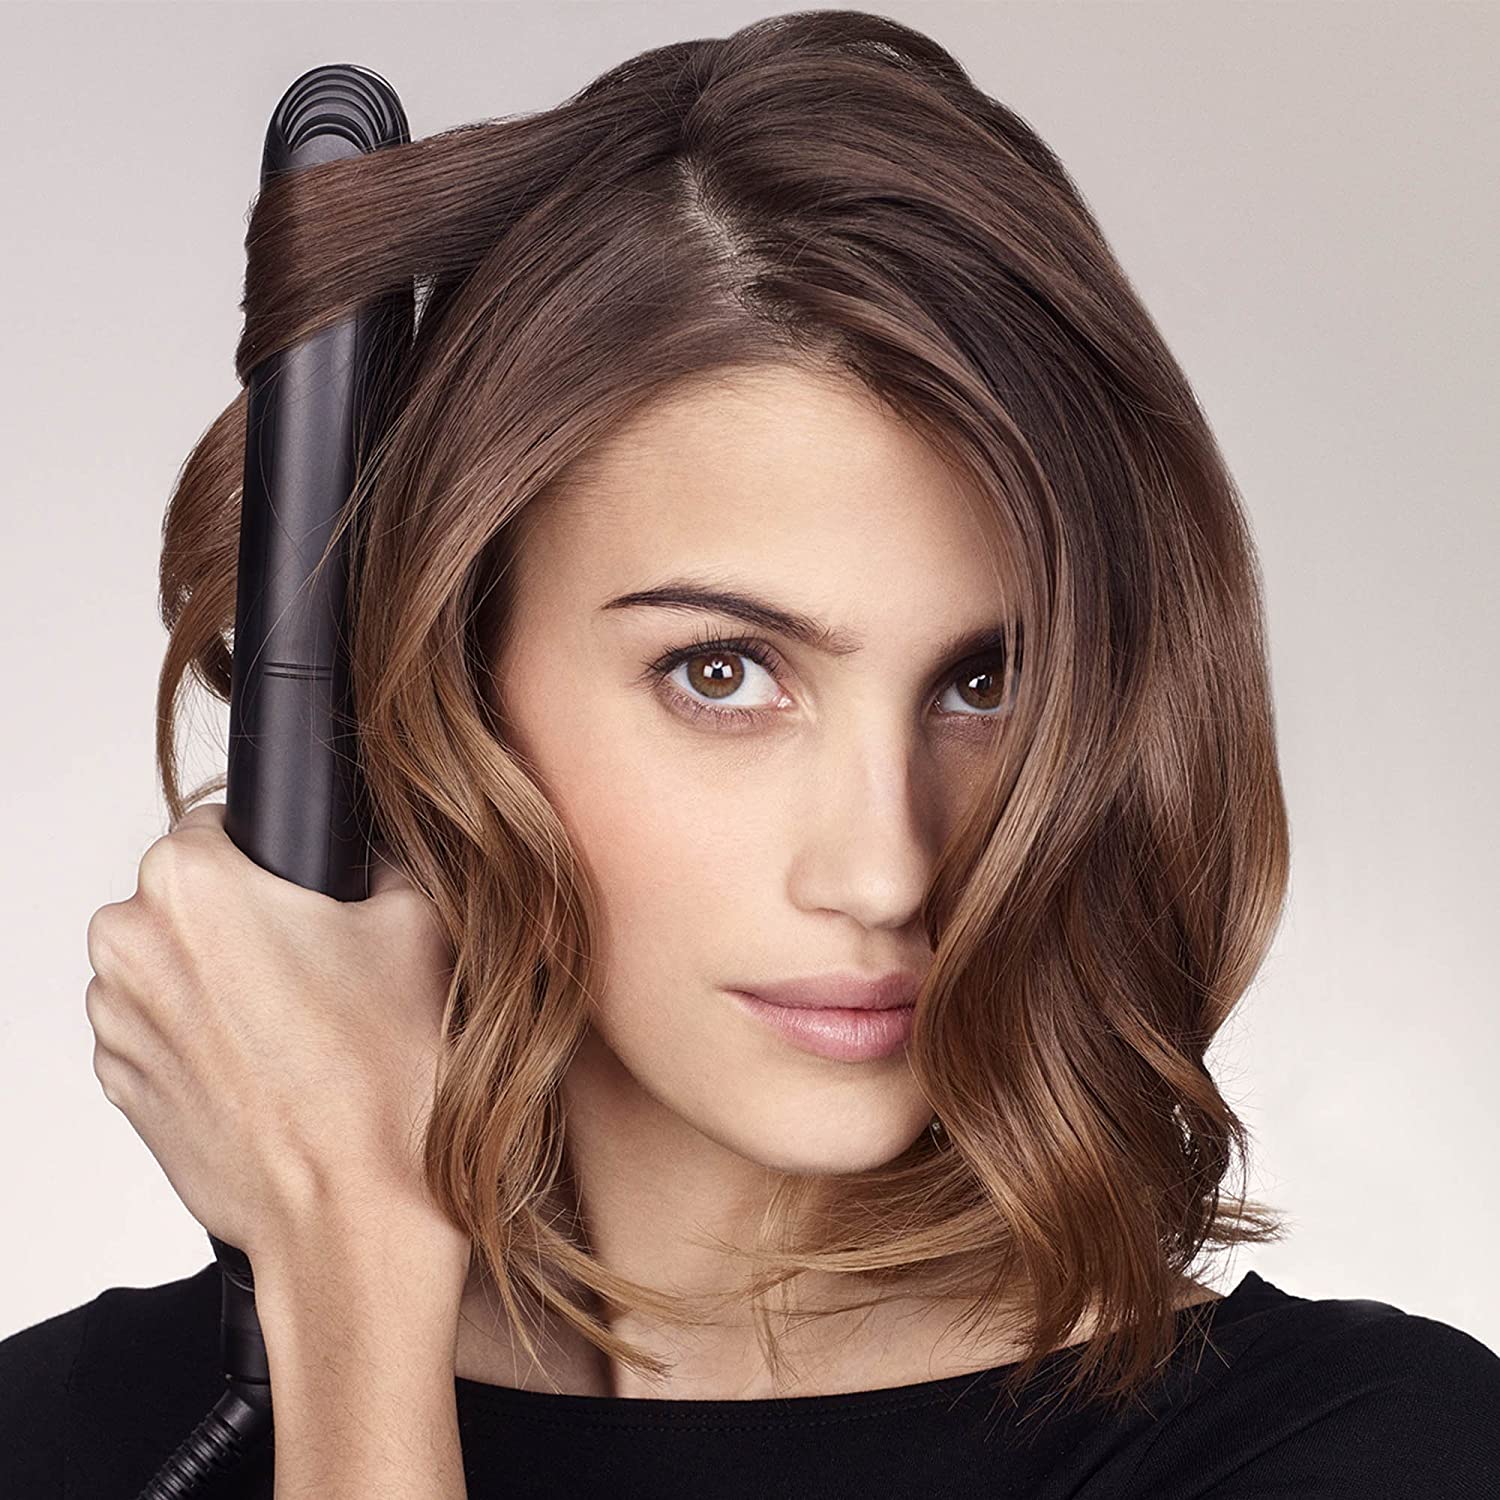 Braun Satin Hair 7 EC1/CU710 Curler –  Lebanon Shopping Buy Online